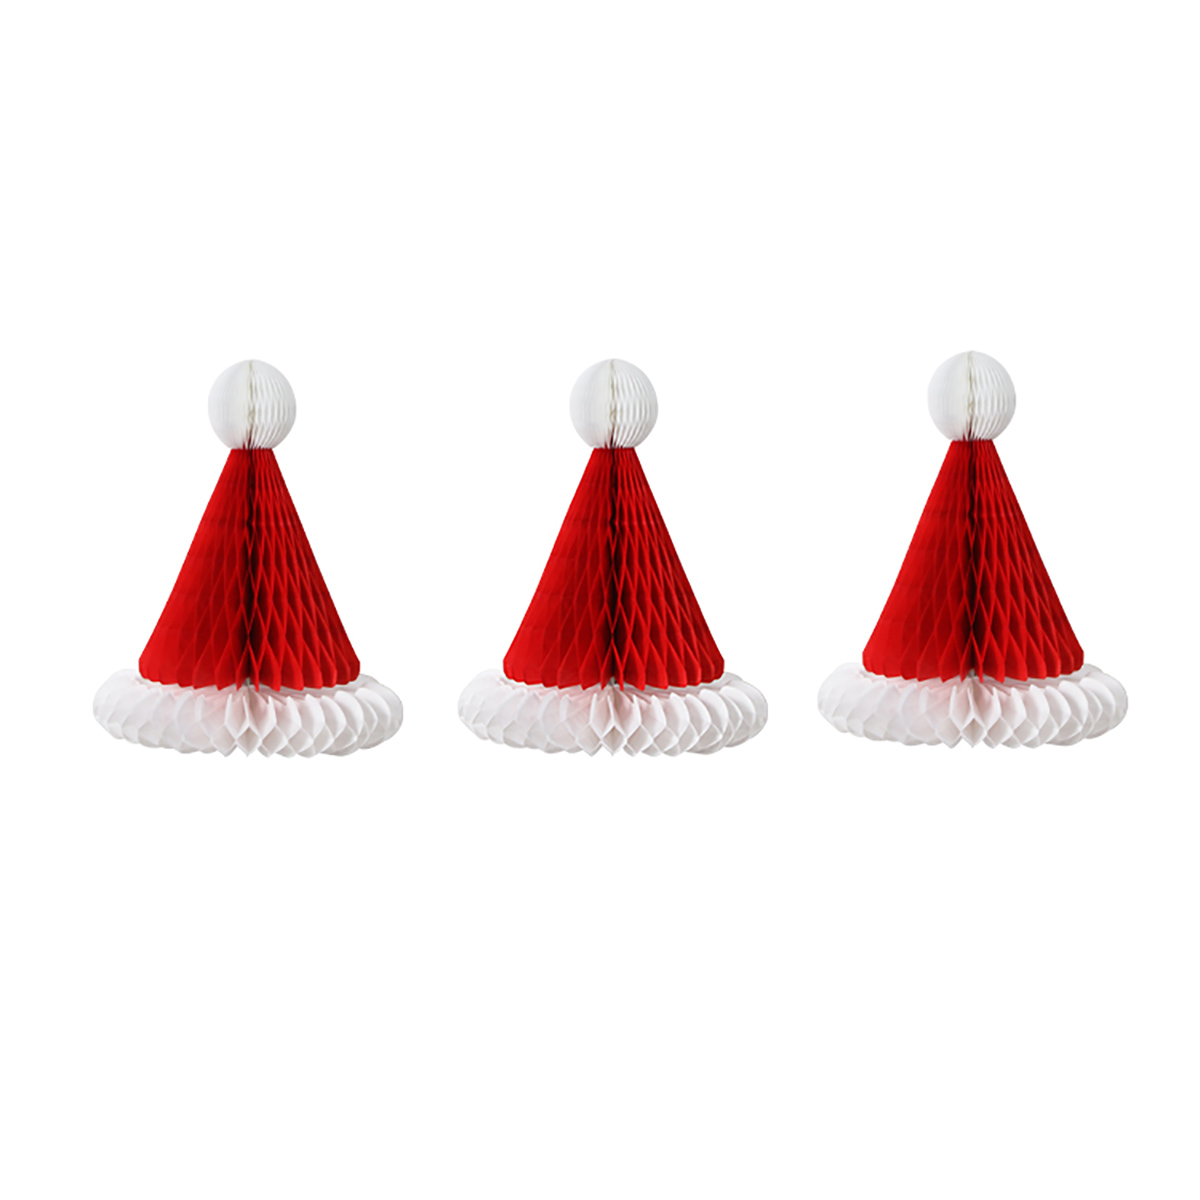 Merry-Christmas-Hats-Trees-Latex-Round-Balloons-Santa-Xmas-Party-Home-Decors-1747490-8